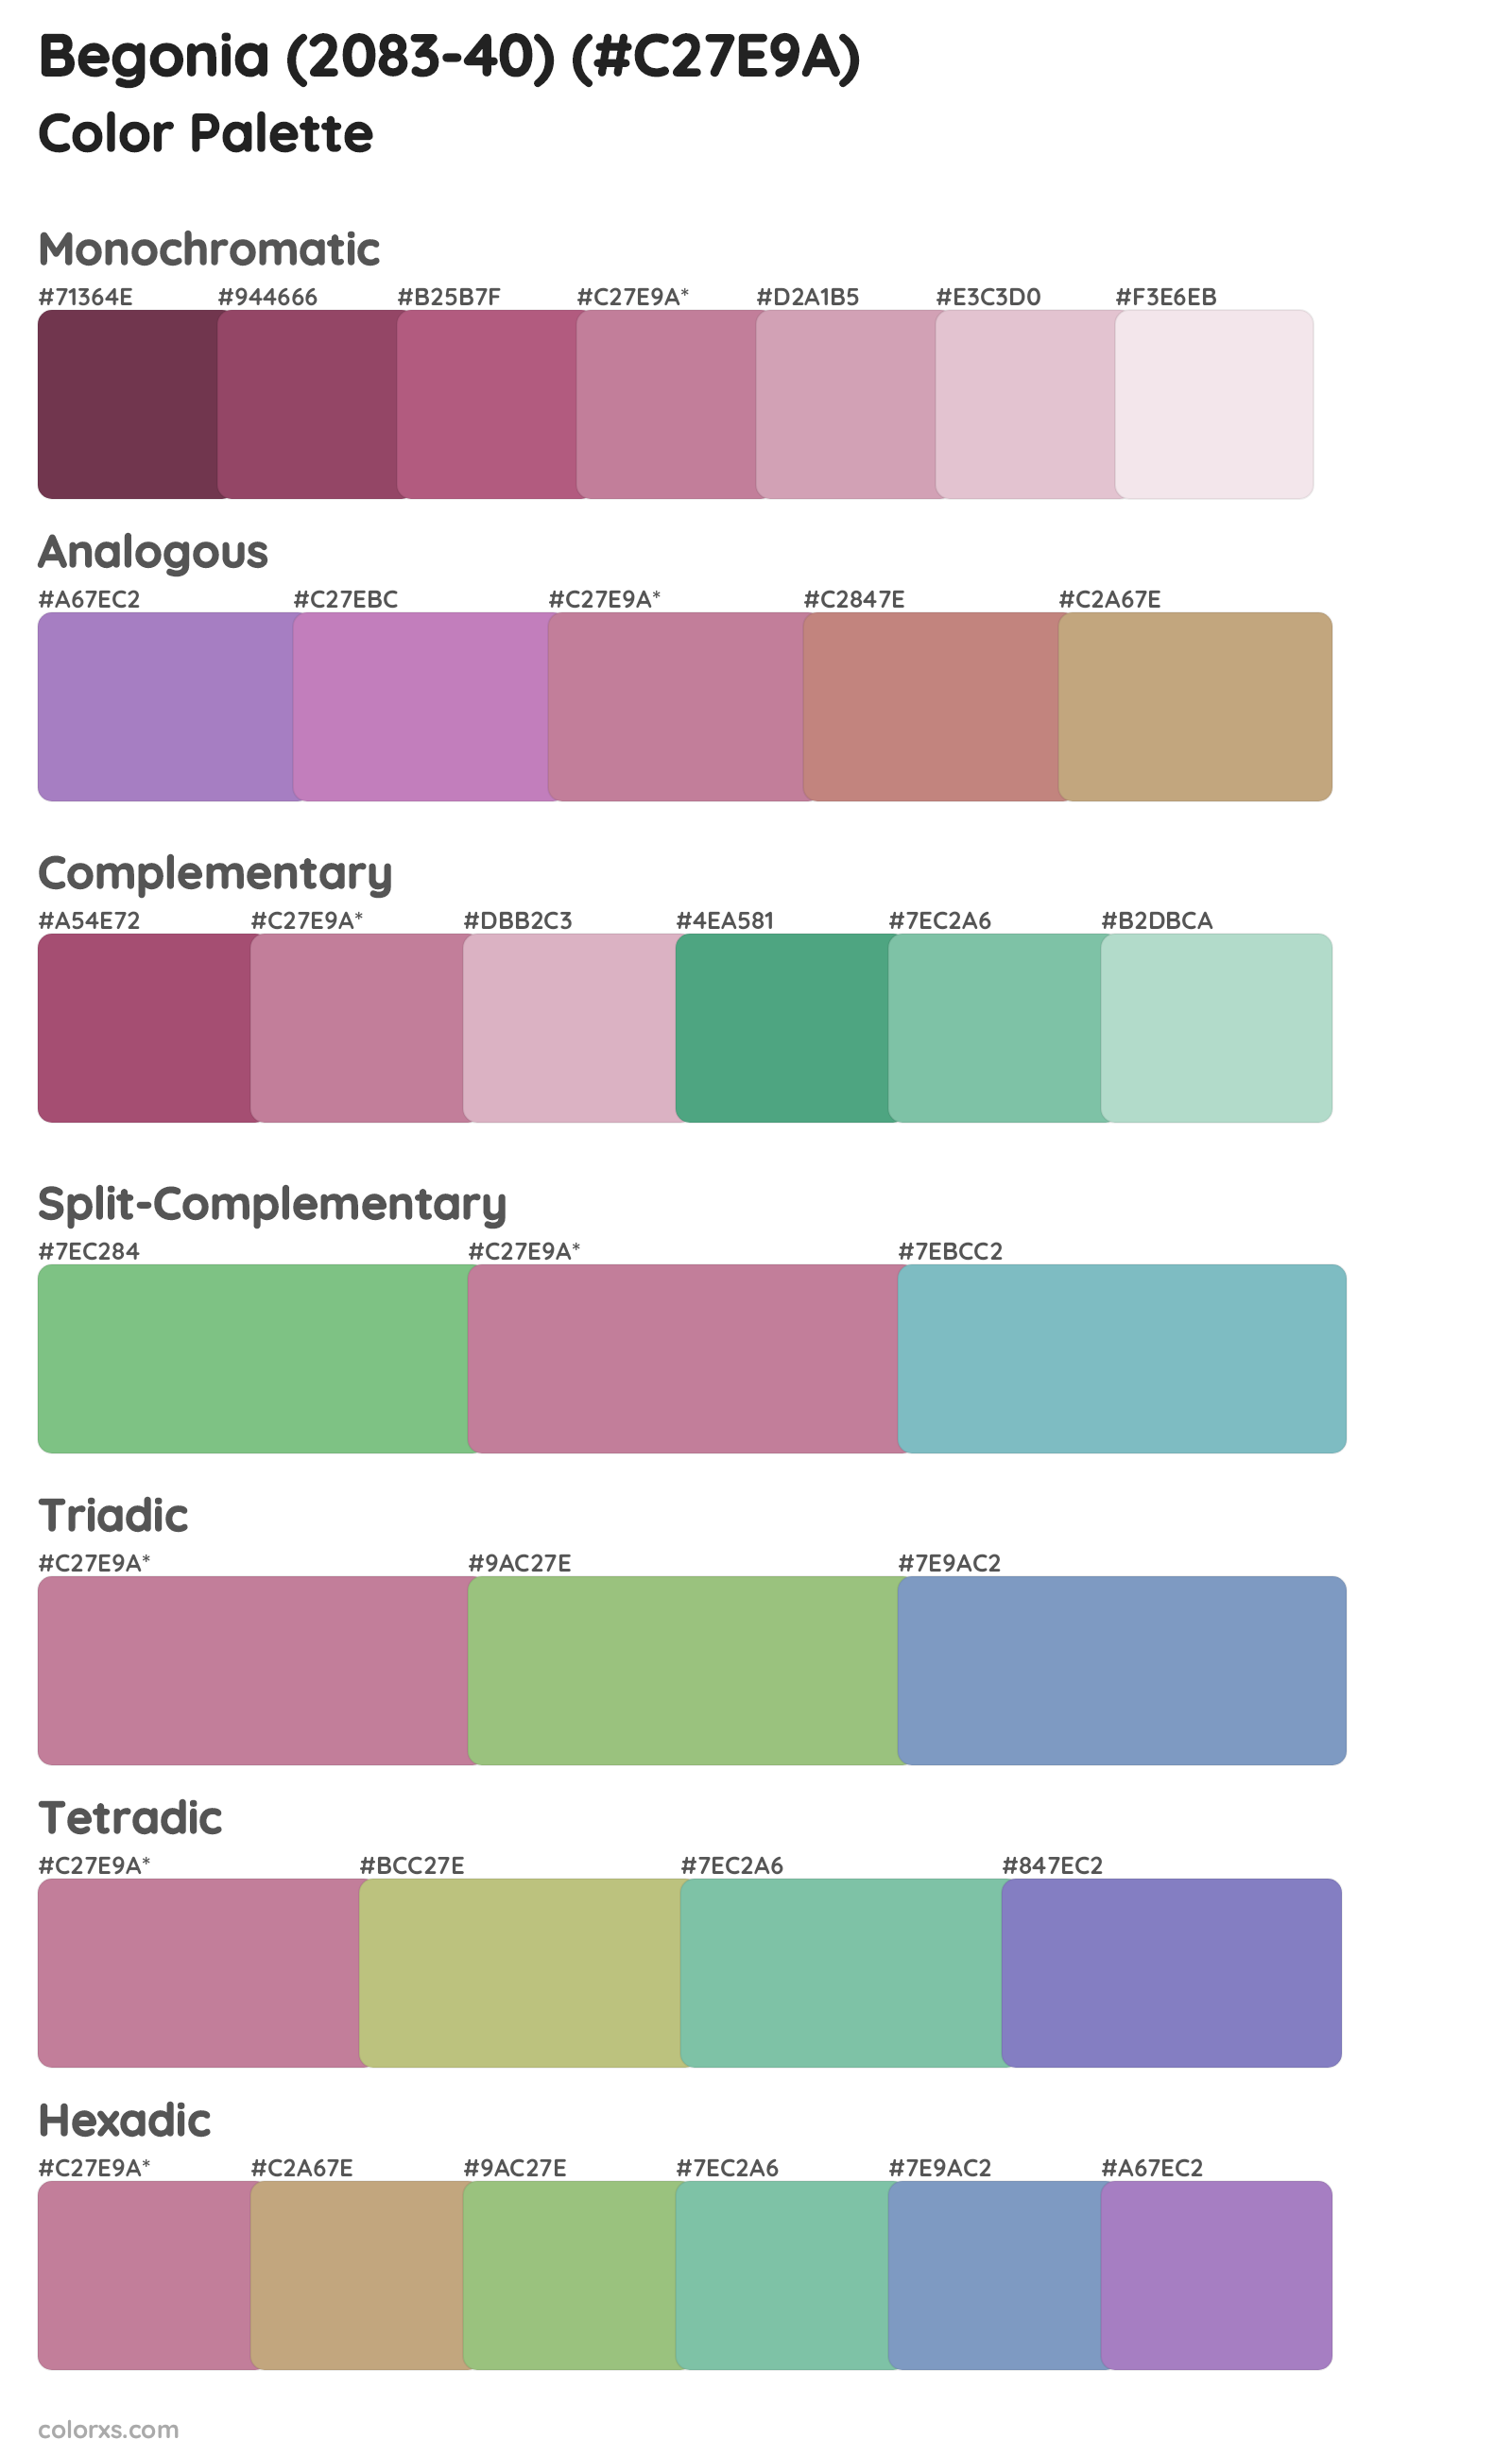 Begonia (2083-40) Color Scheme Palettes